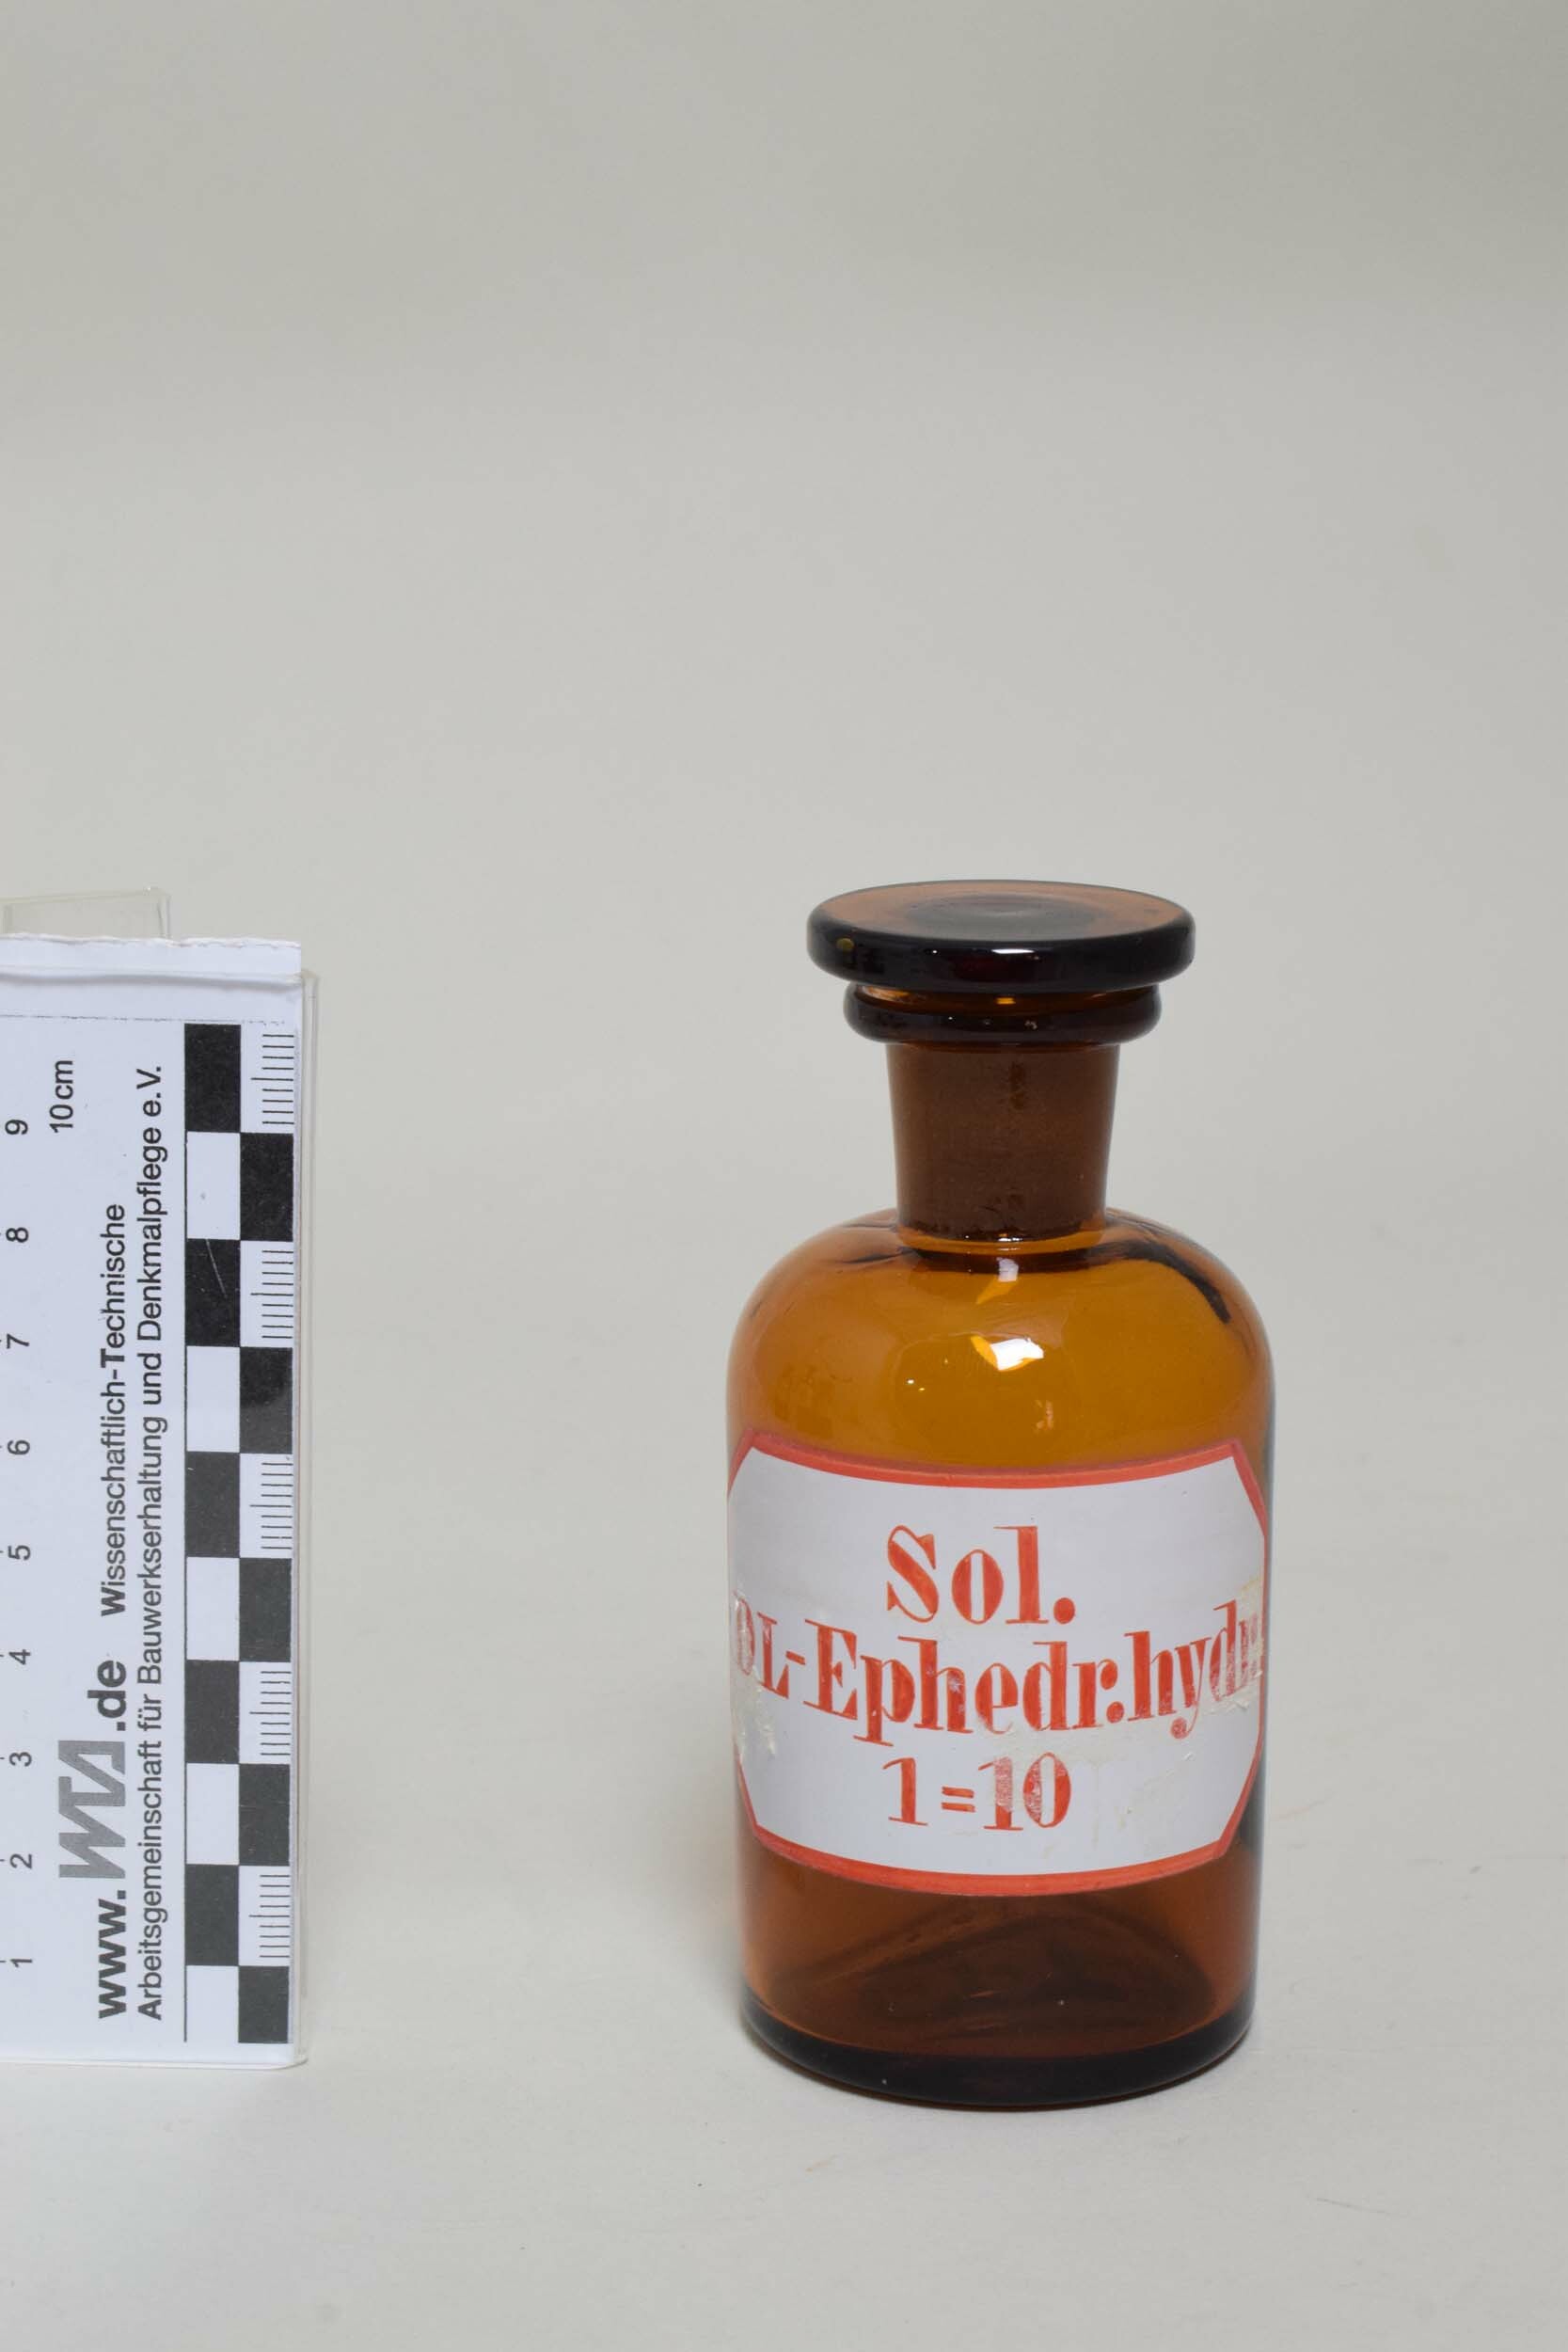 Apothekenflasche "Sol. DL-Ephedr. hydr. / 1=10" (Heimatmuseum Dohna CC BY-NC-SA)